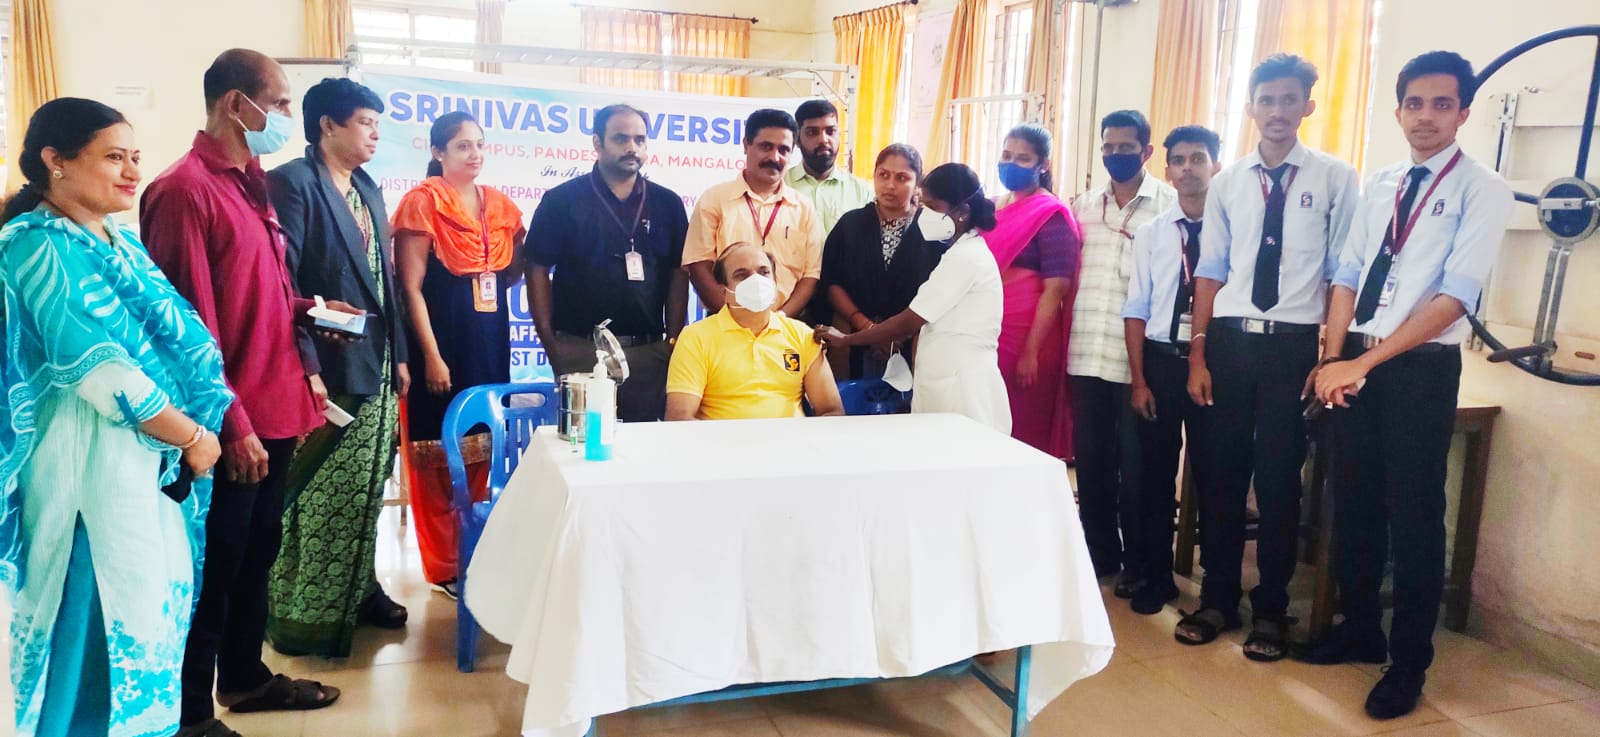 Free Covid vaccination drive held at Srinivas University